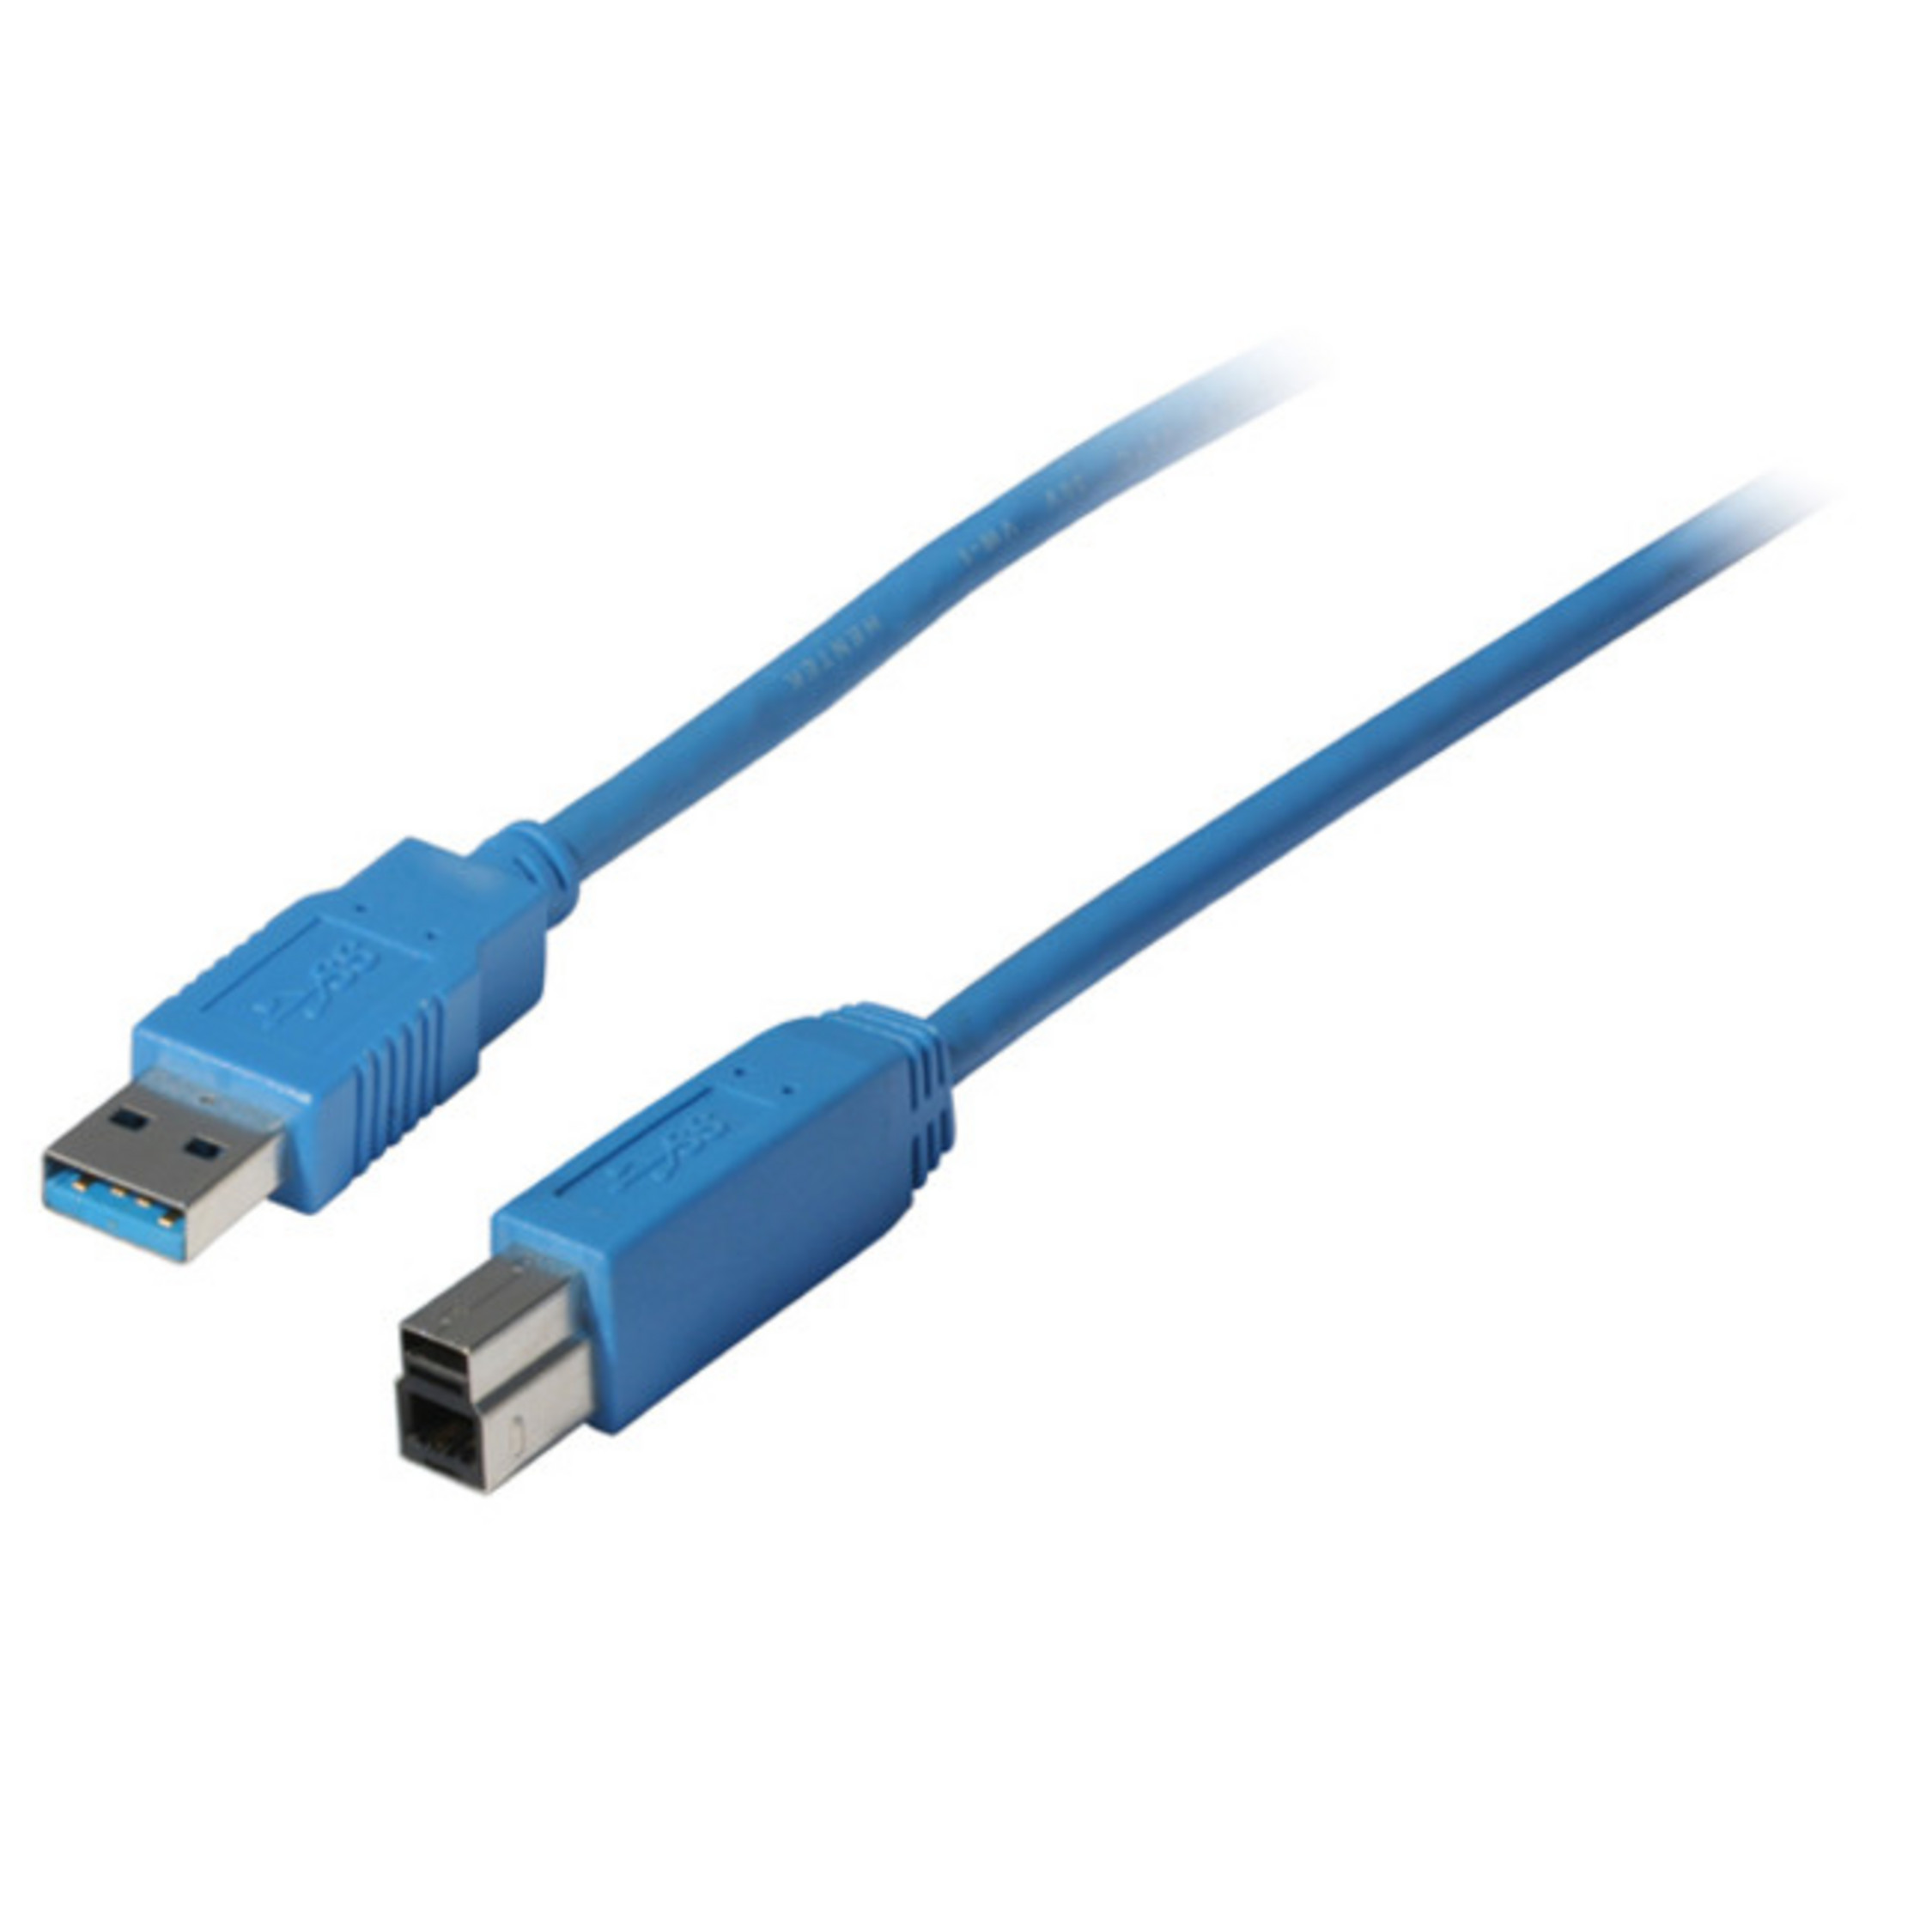 S/CONN MAXIMUM CONNECTIVITY USB Kabel 5m USB / B Kabel 3.0 Stecker A Stecker blau USB